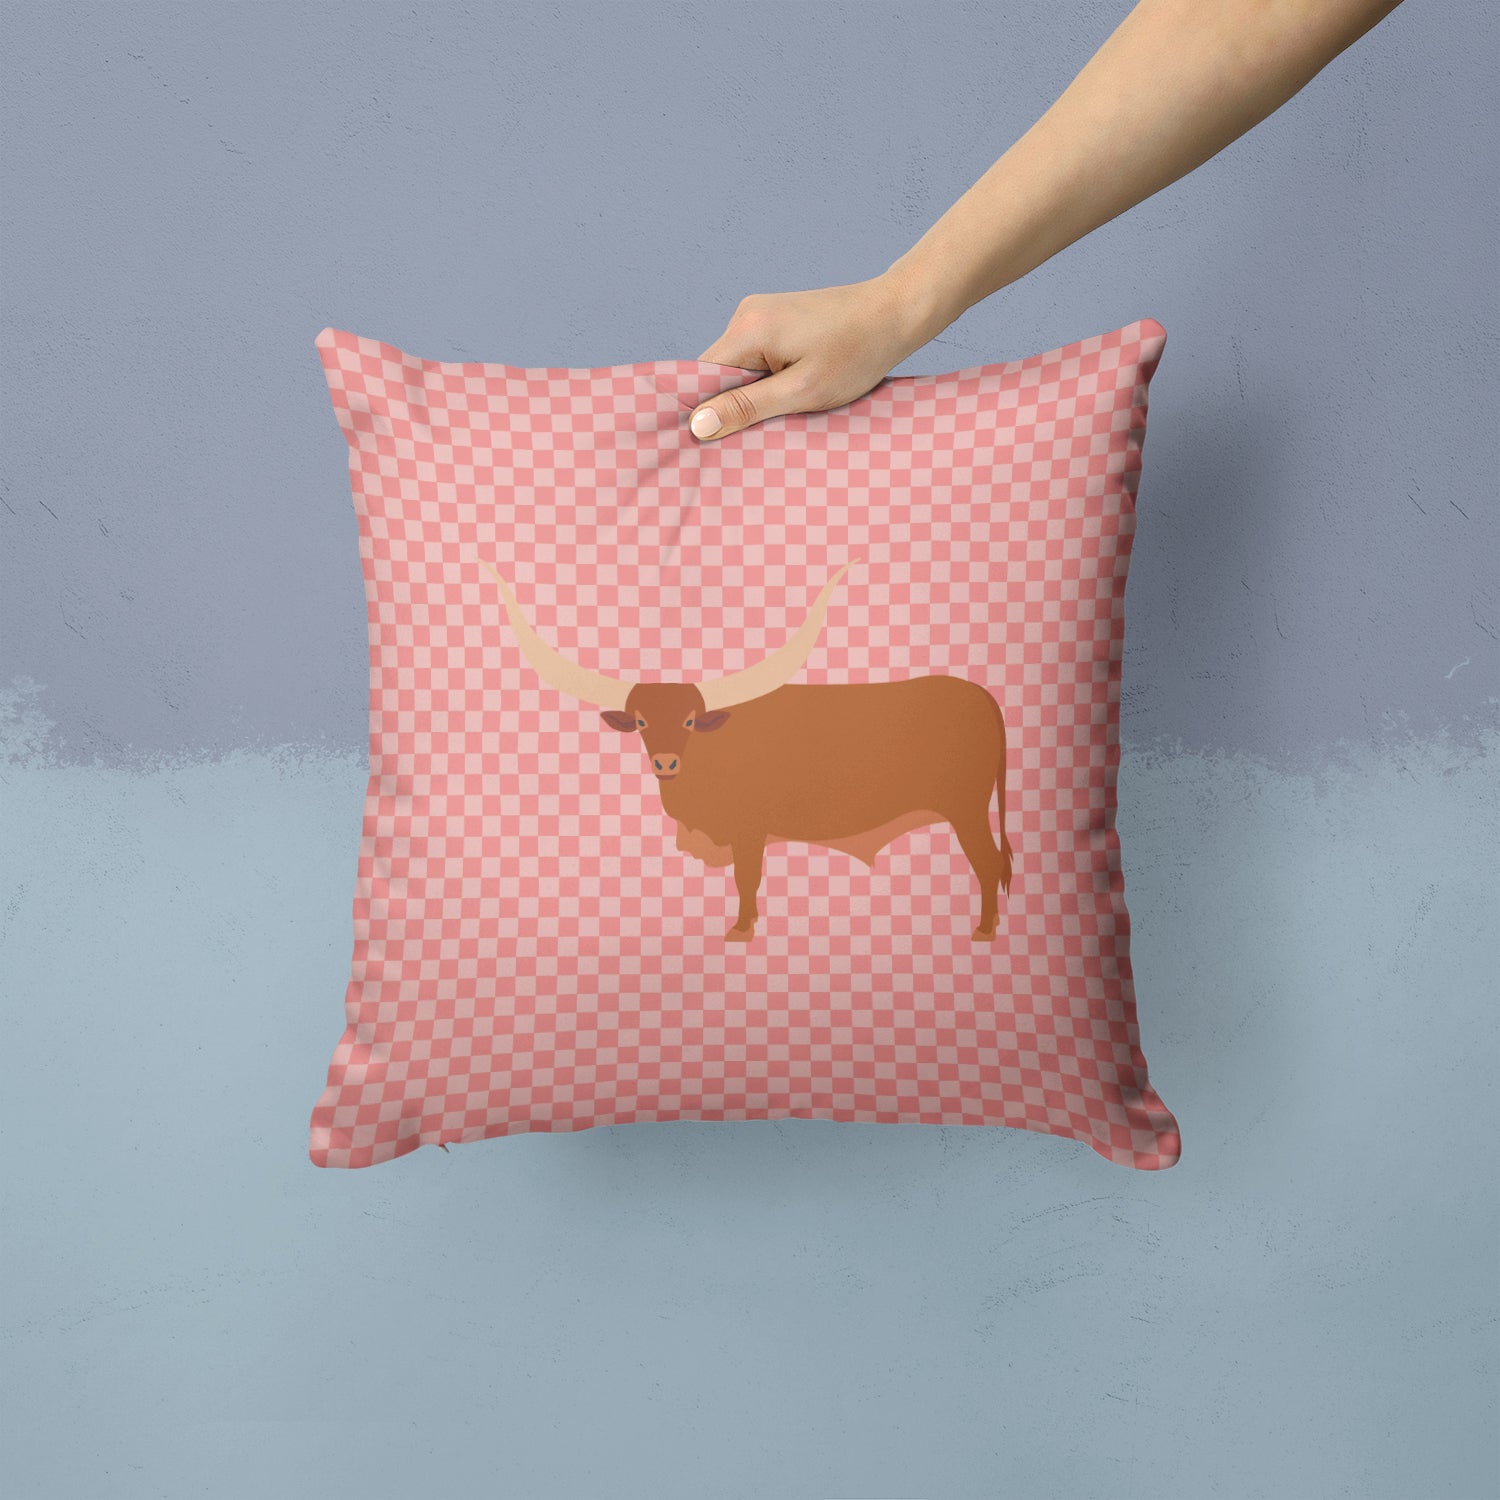 Ankole-Watusu Cow Pink Check Fabric Decorative Pillow BB7823PW1414 - the-store.com